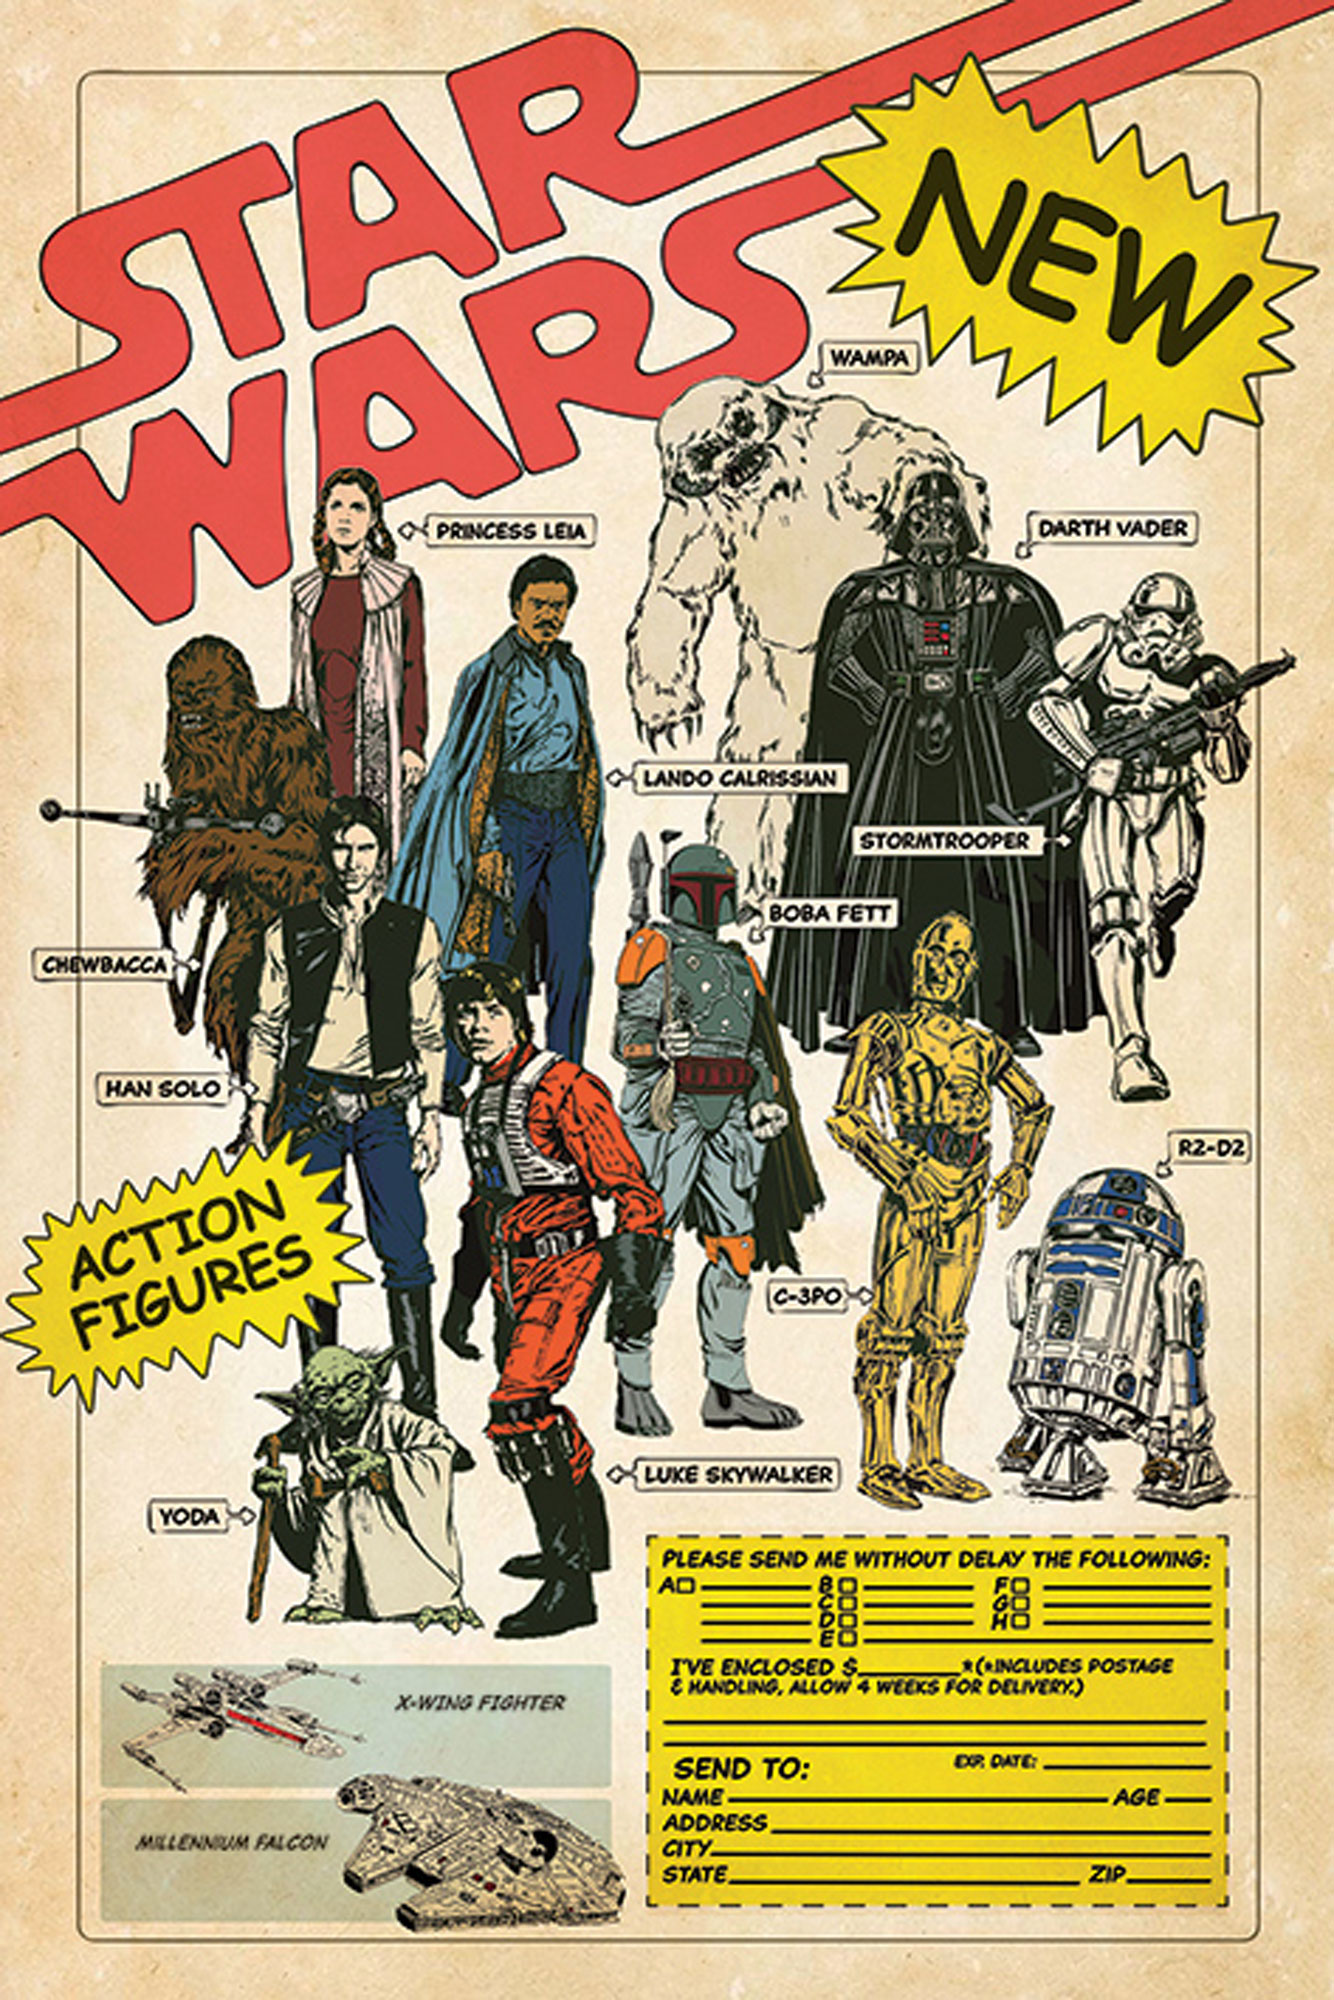 Star Action Wars - Figures